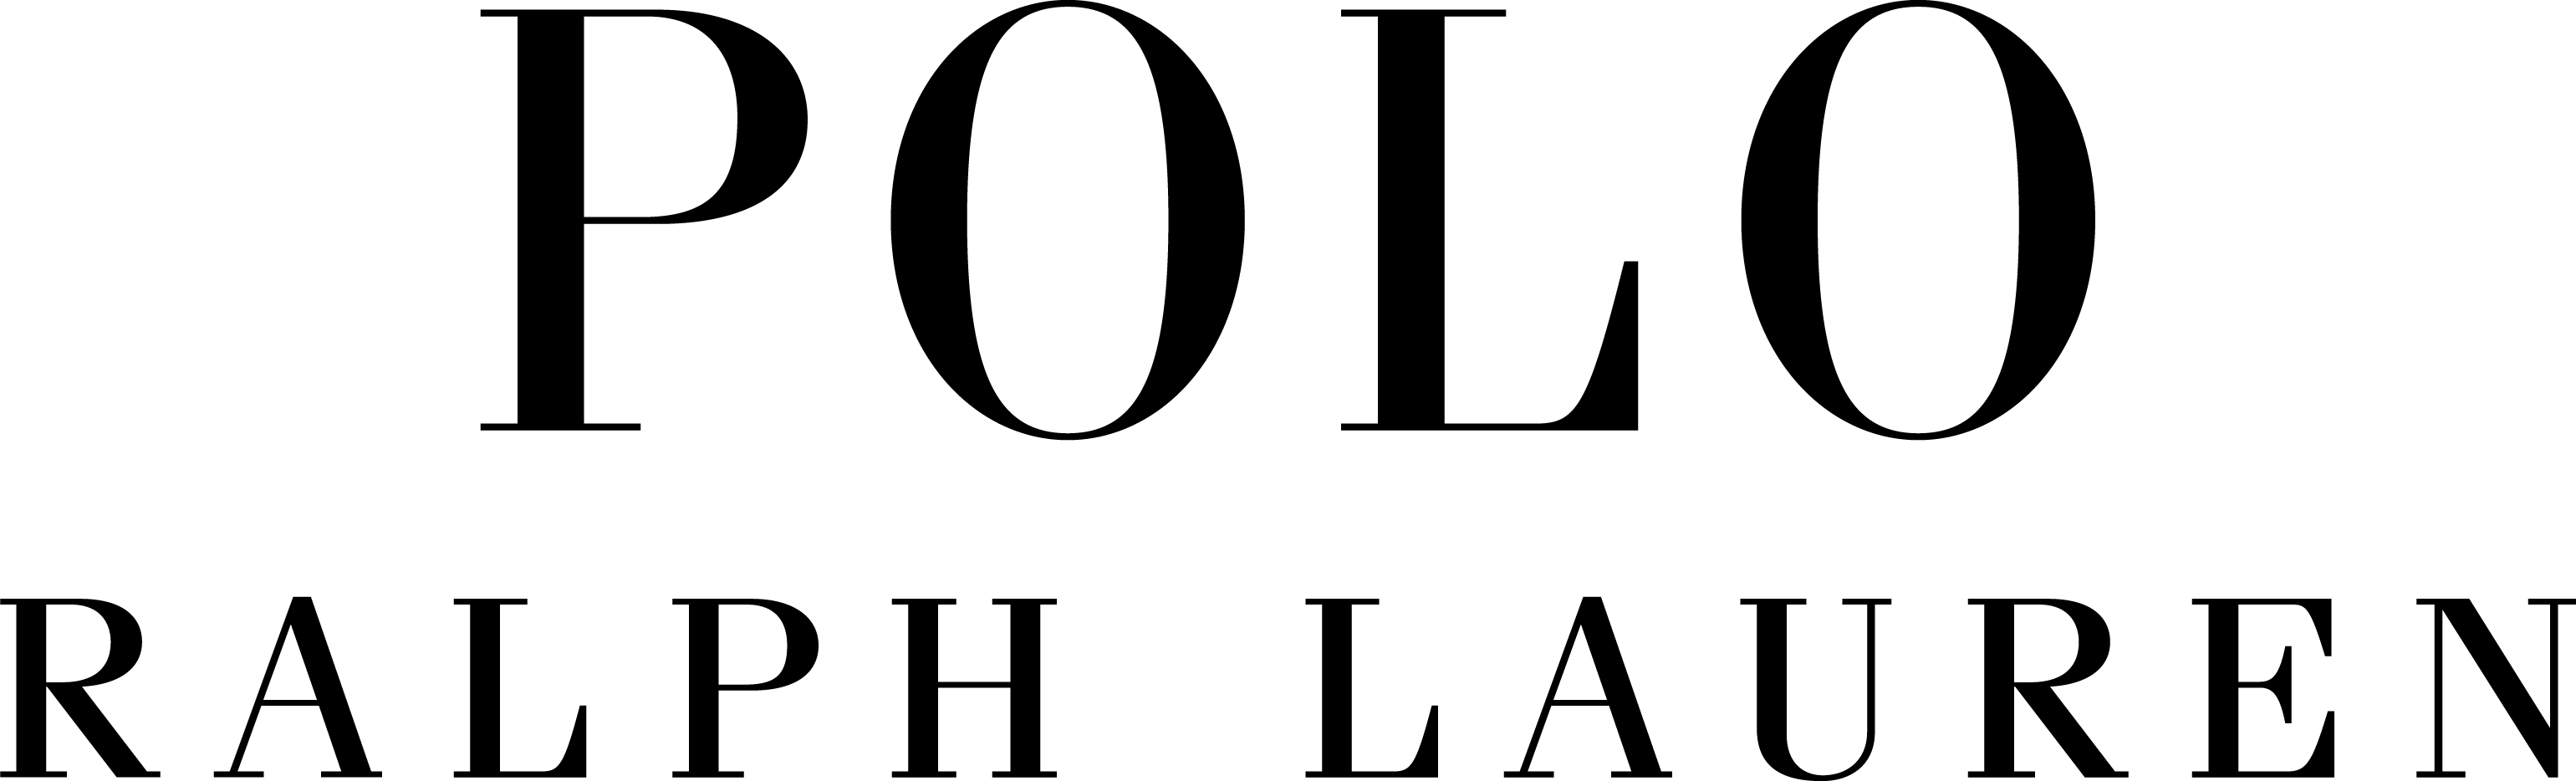 Polo Ralph Lauren Logo Logo PNG HD Quality